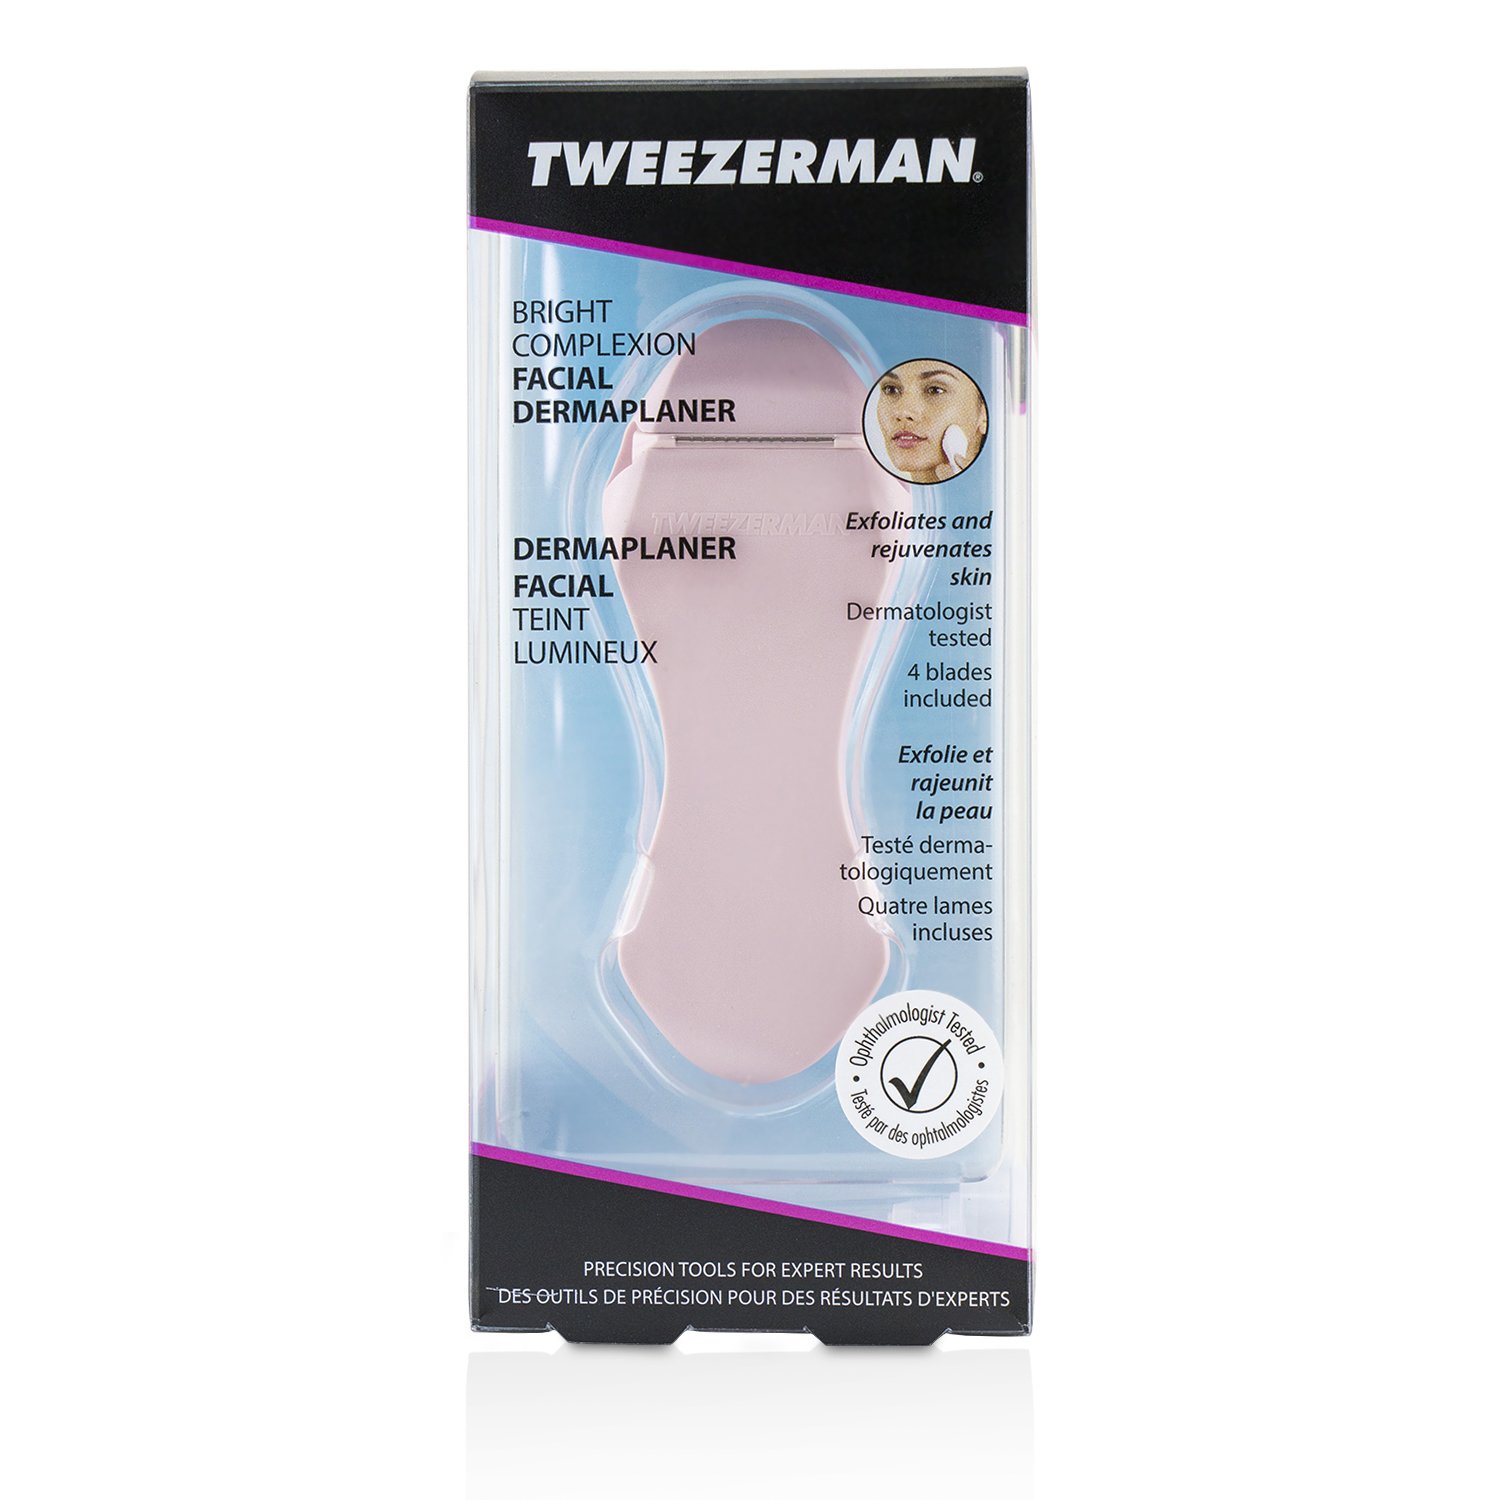 微之魅 Tweezerman - 臉部亮白明采工具Bright Complexion Facial Dermaplanner